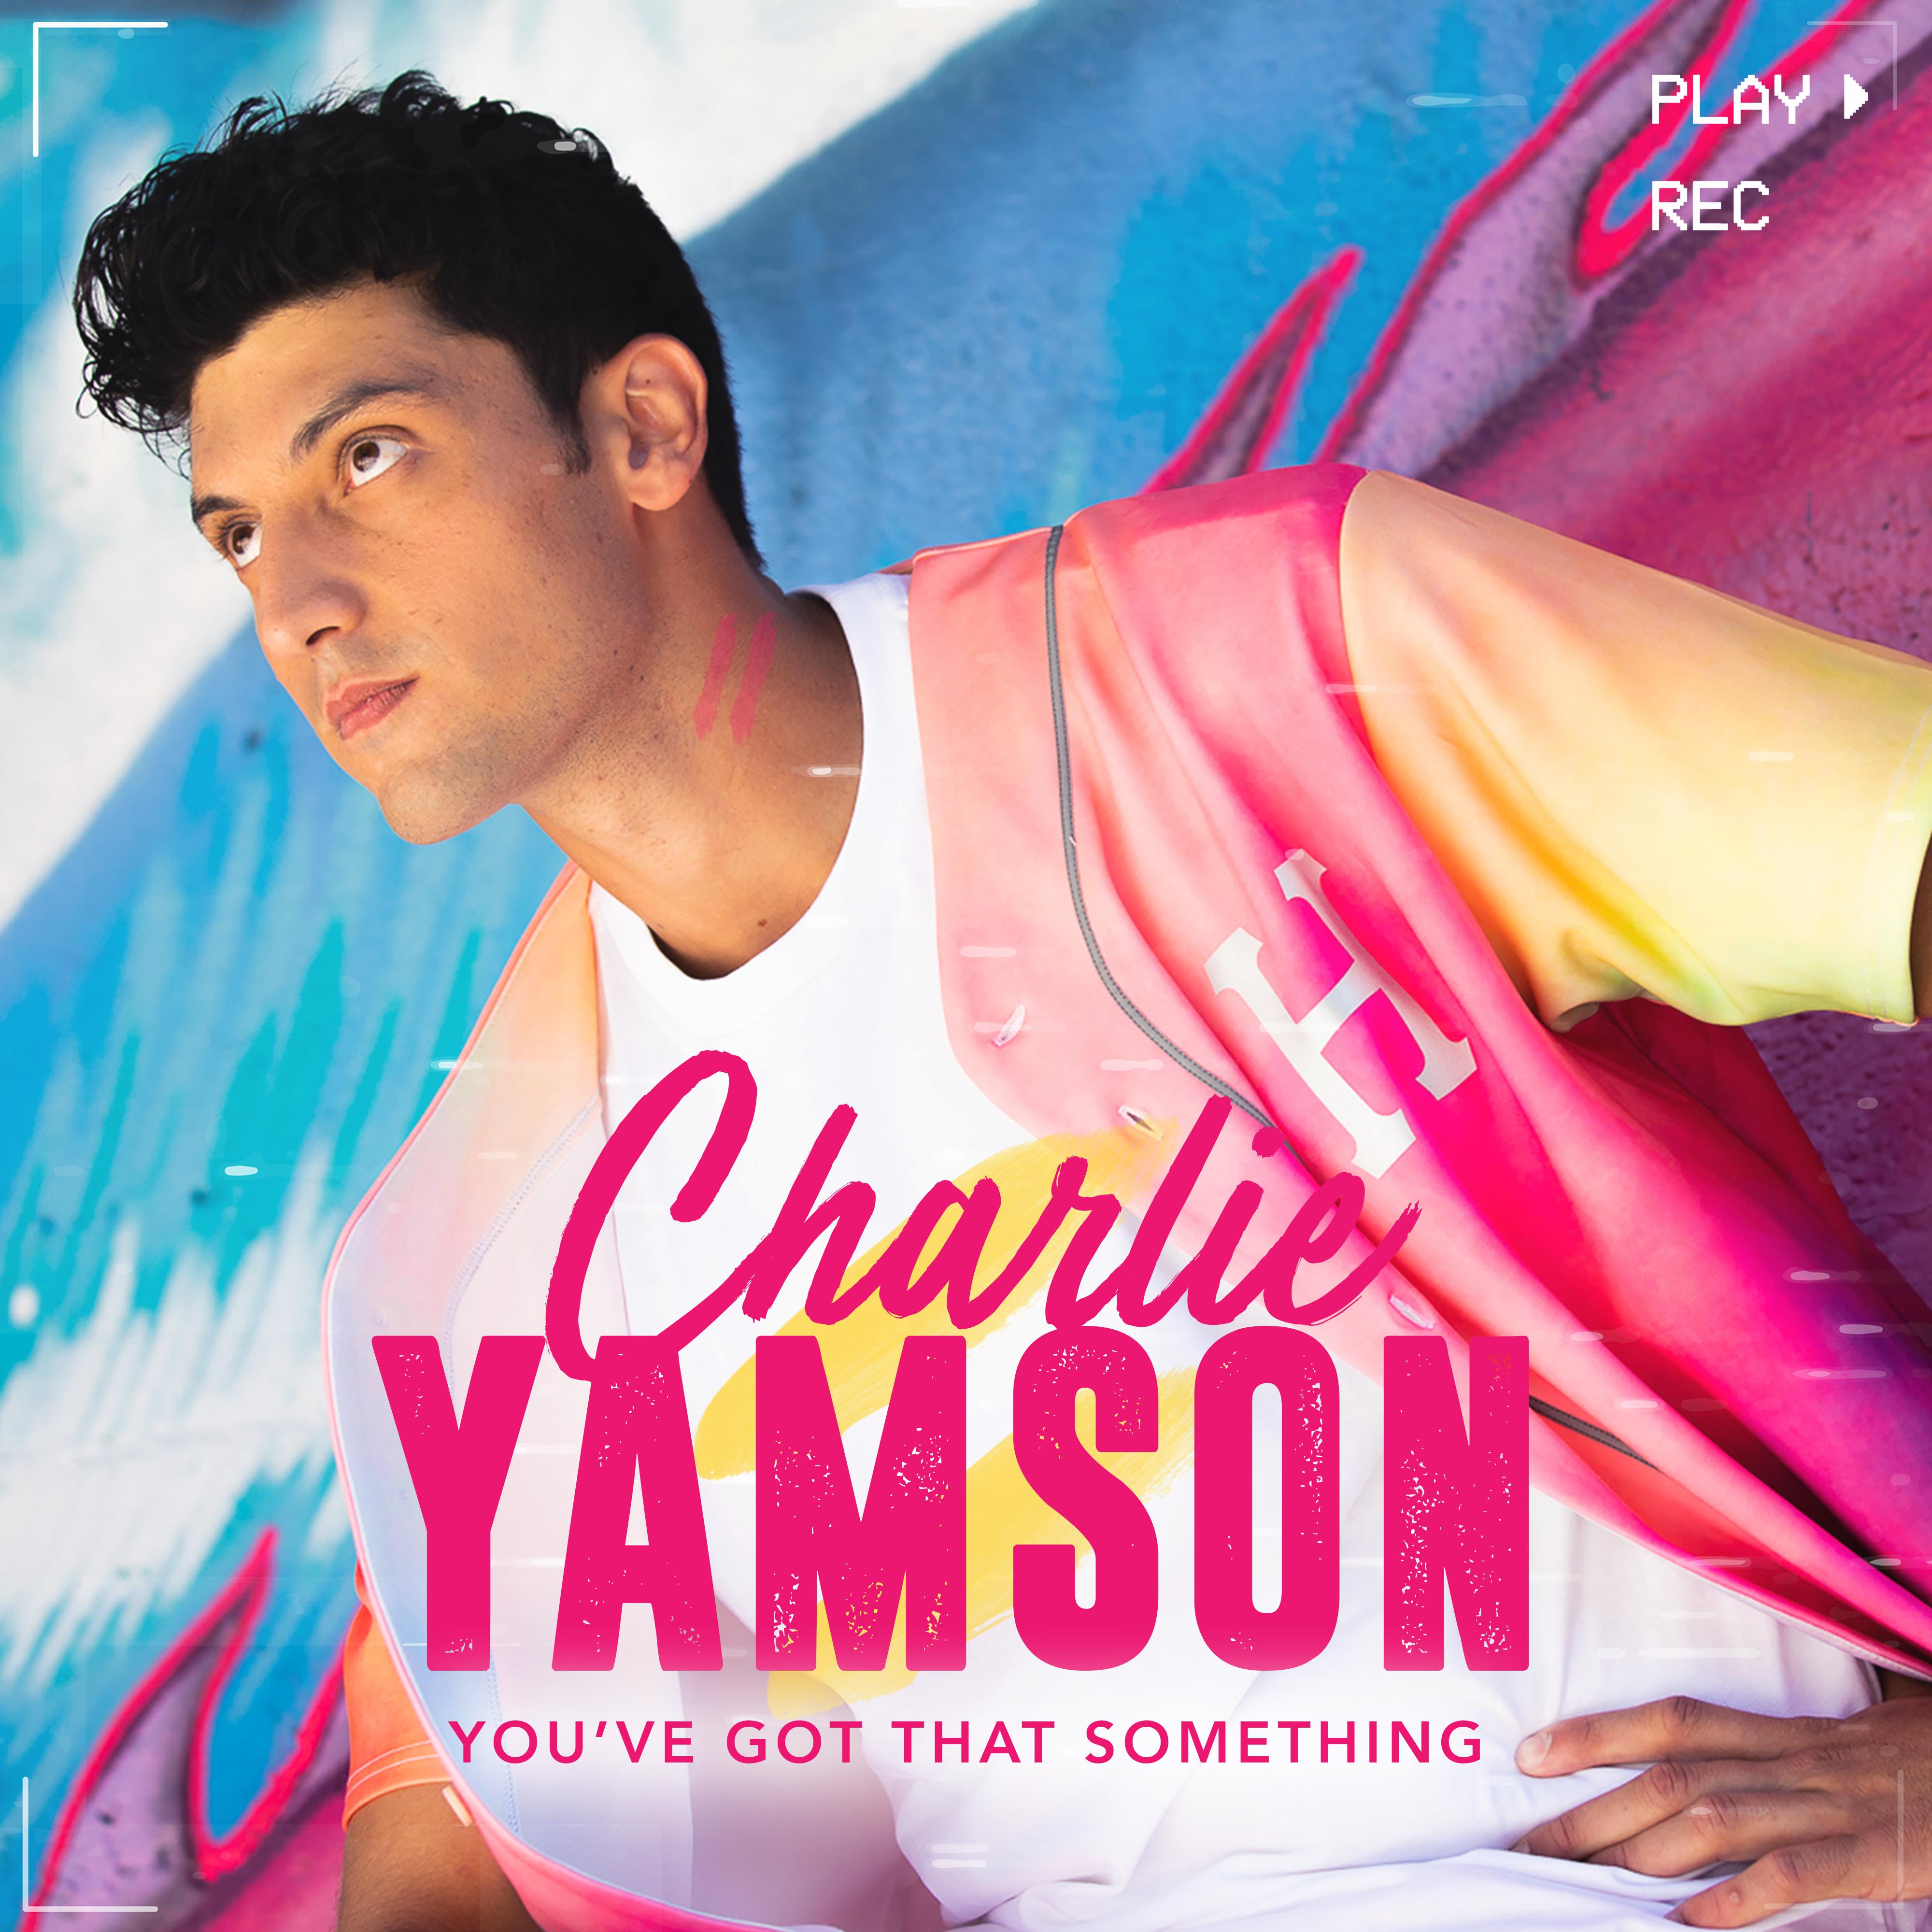 Charlie Yamson - You've Got That Something